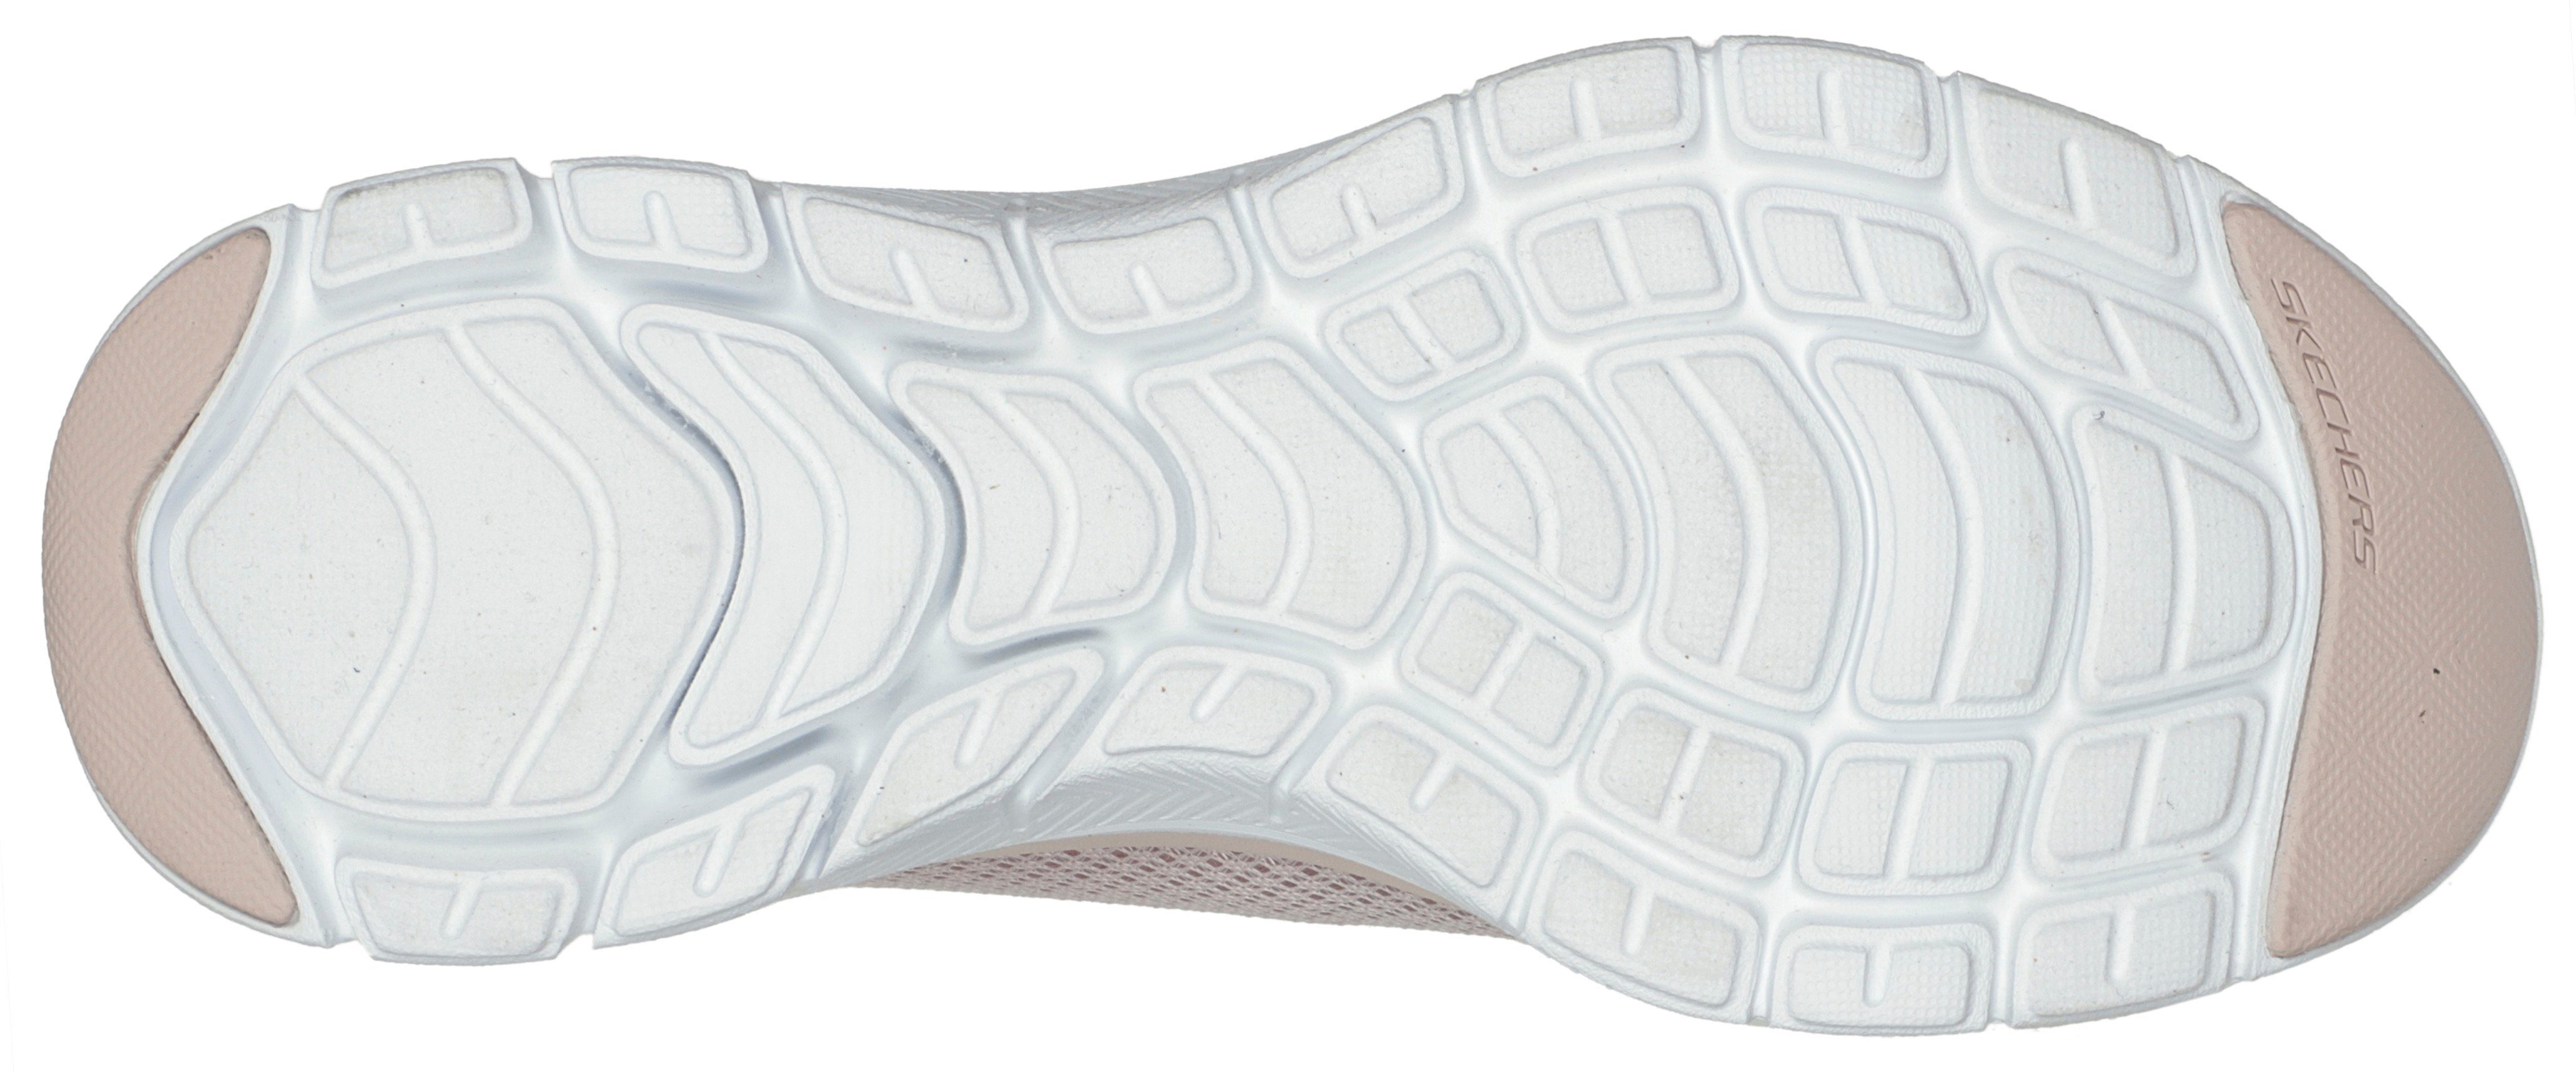 Sneaker Memory Skechers BRILLINAT Foam hellrosa Ausstattung APPEAL Air-Cooled mit 4.0 FLEX VIEW